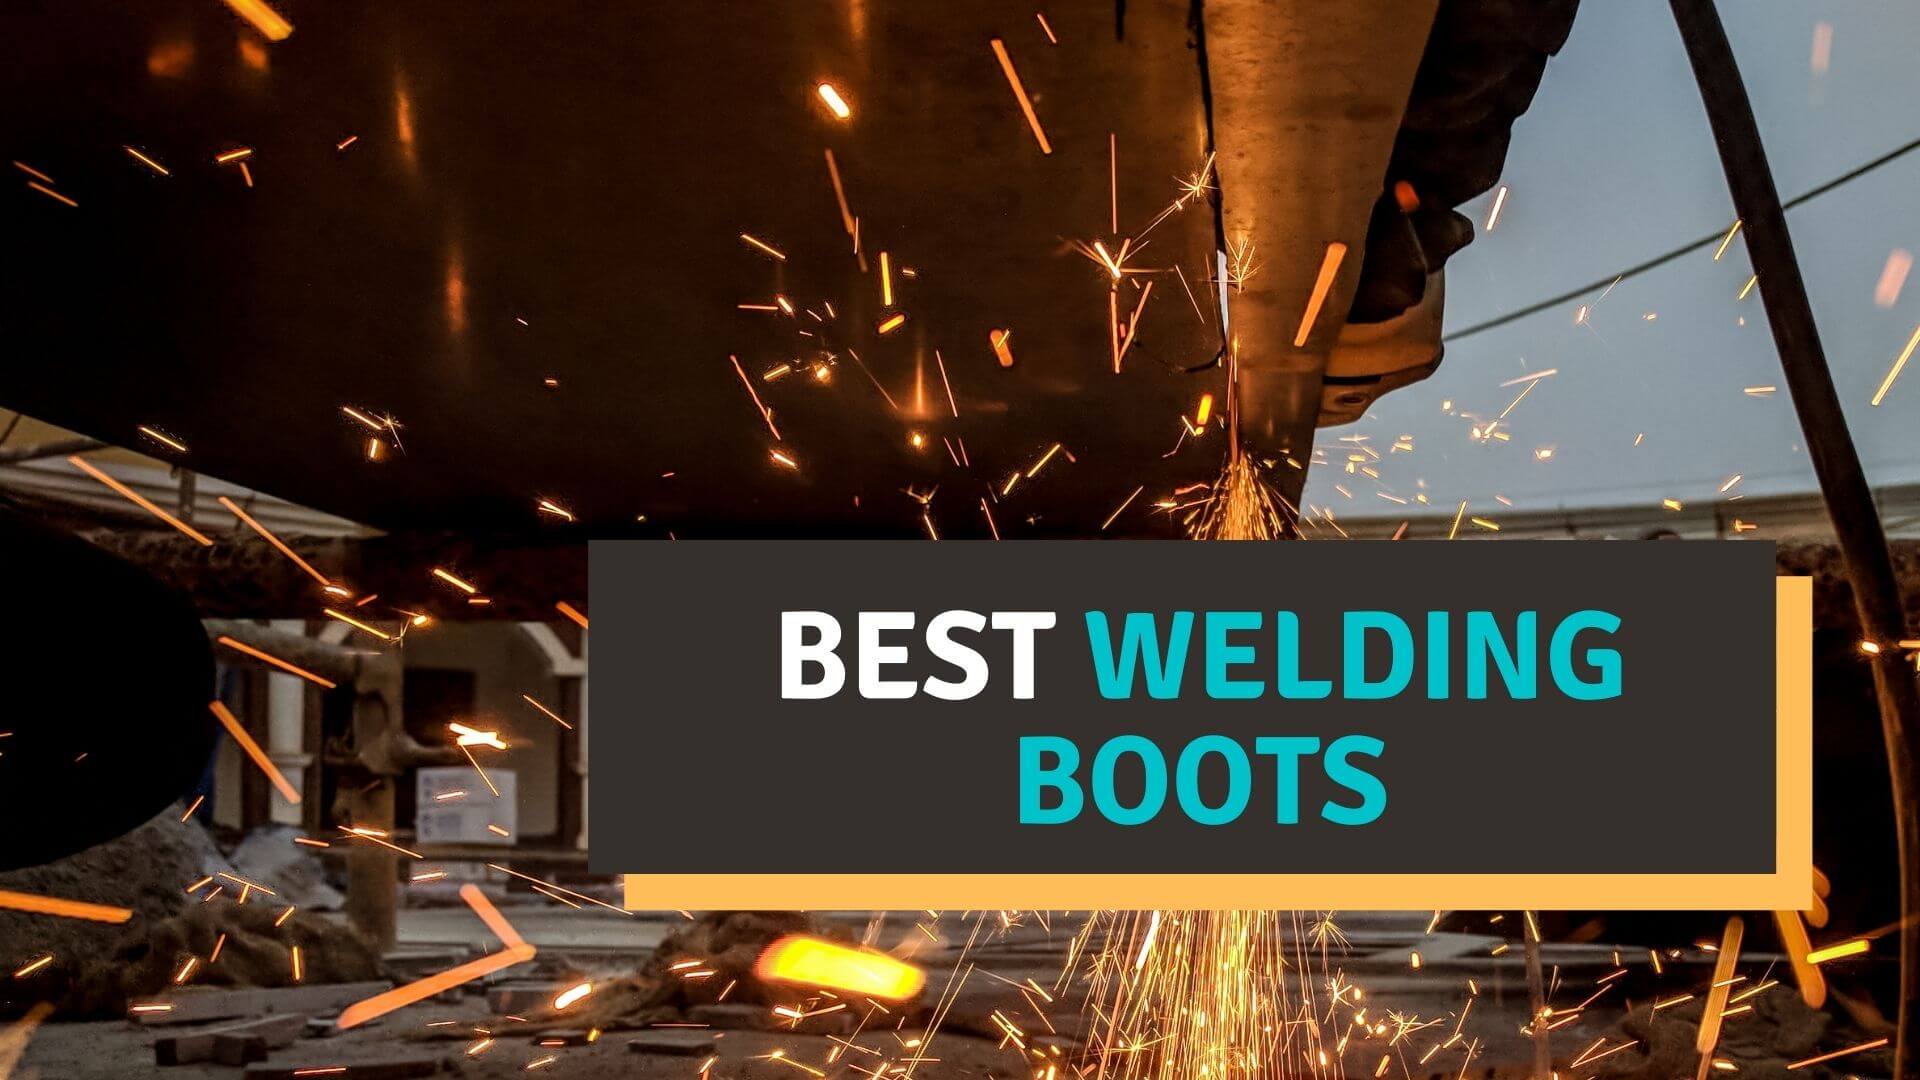 Best welding boots